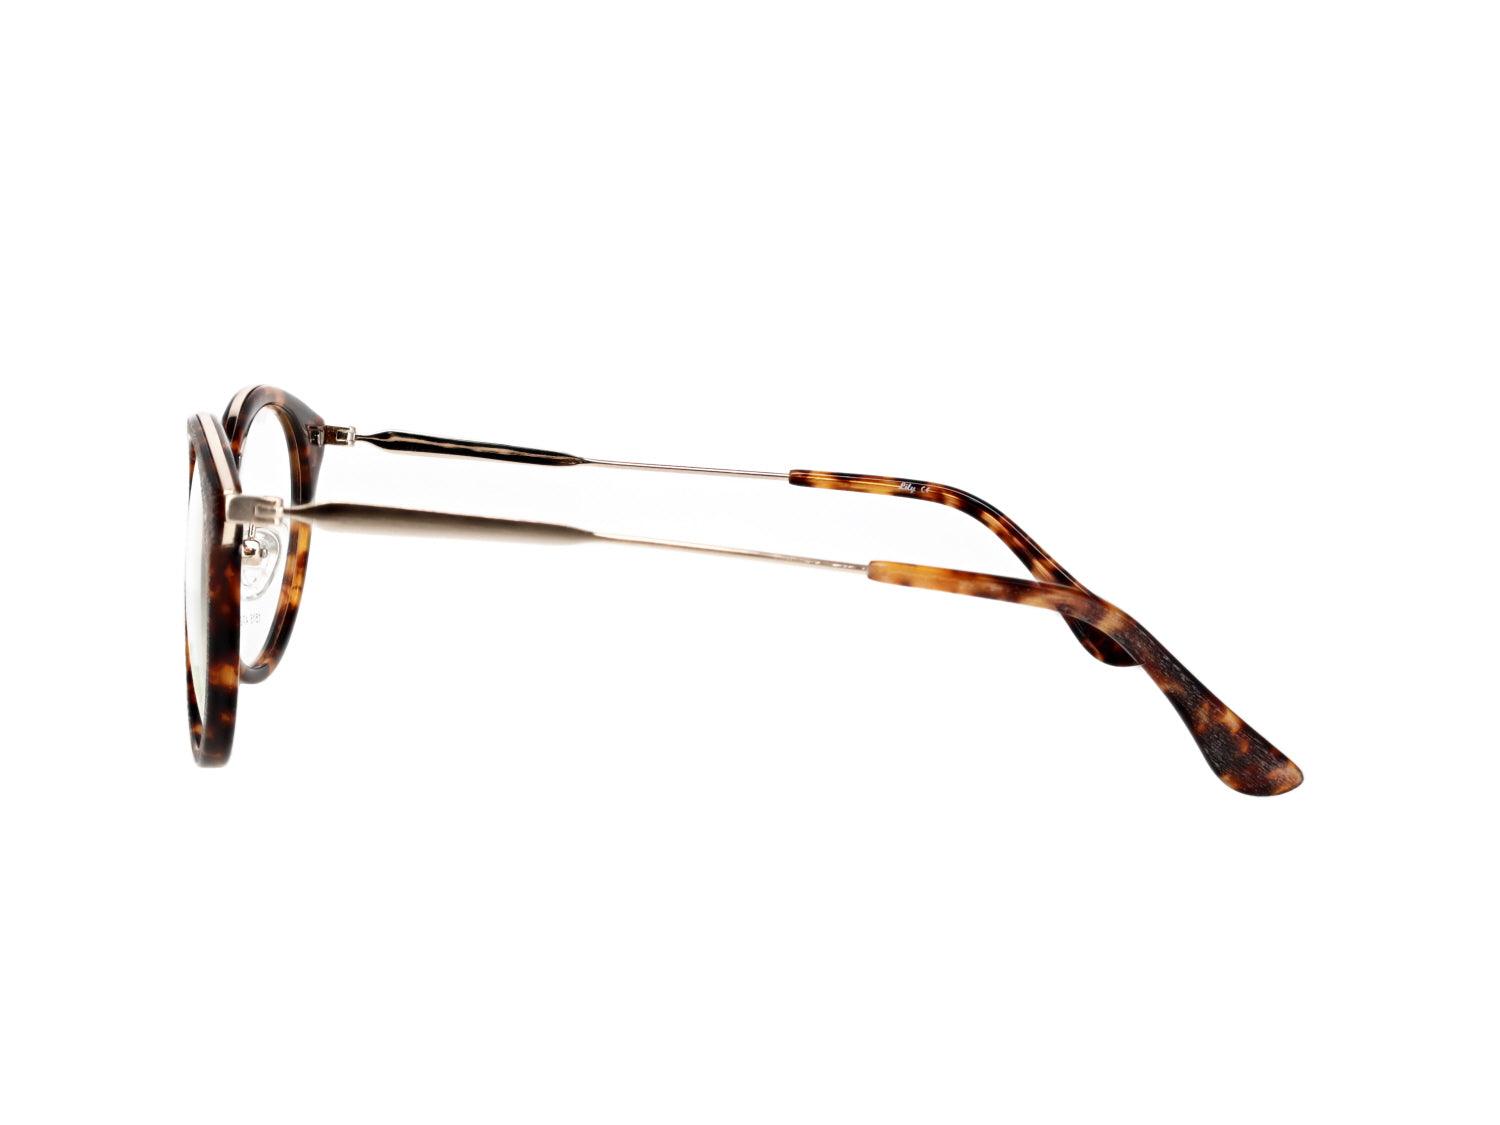 Lily Eyeglasses, 1515 C03 - Vision 770